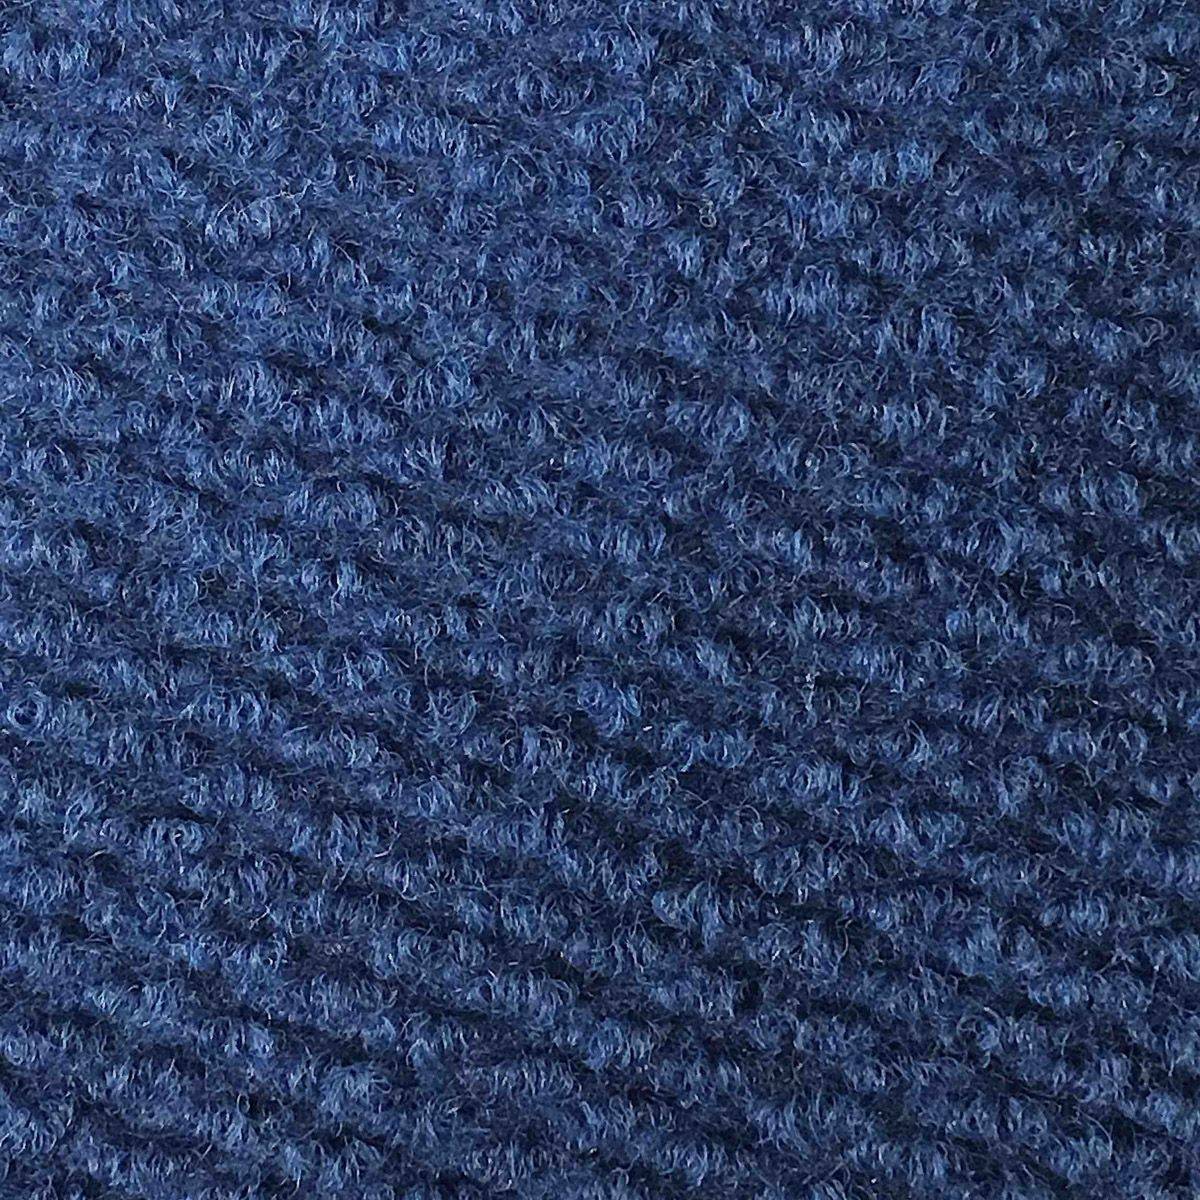 Heckmondwike Hobnail Carpet Tile Pacific Blue 50 X 50 cm